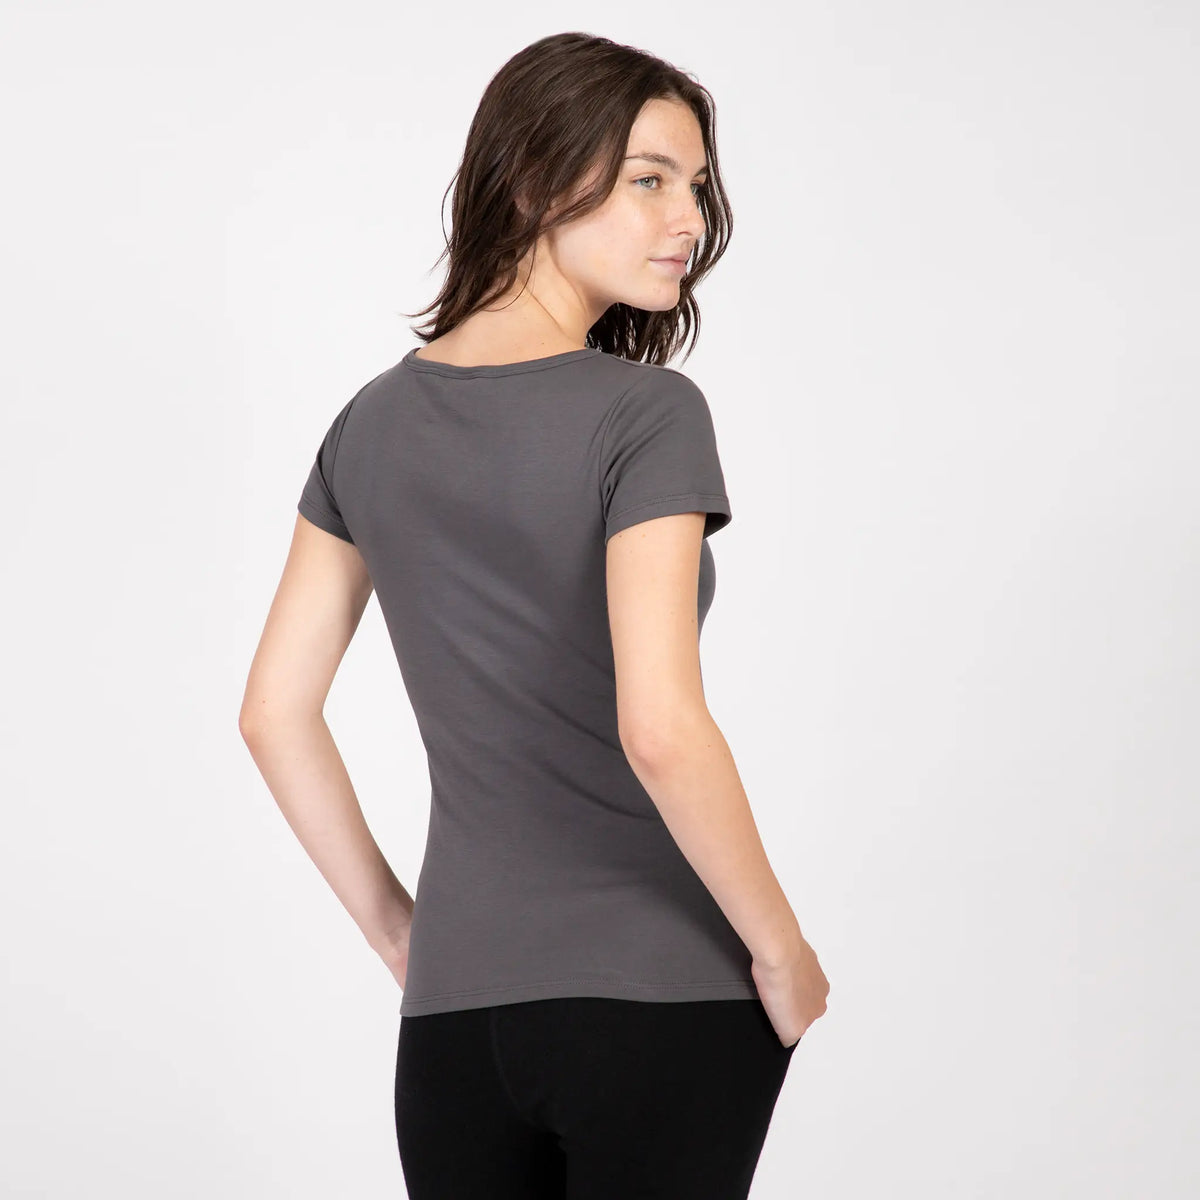 womens silky soft tshirt vneck color gray